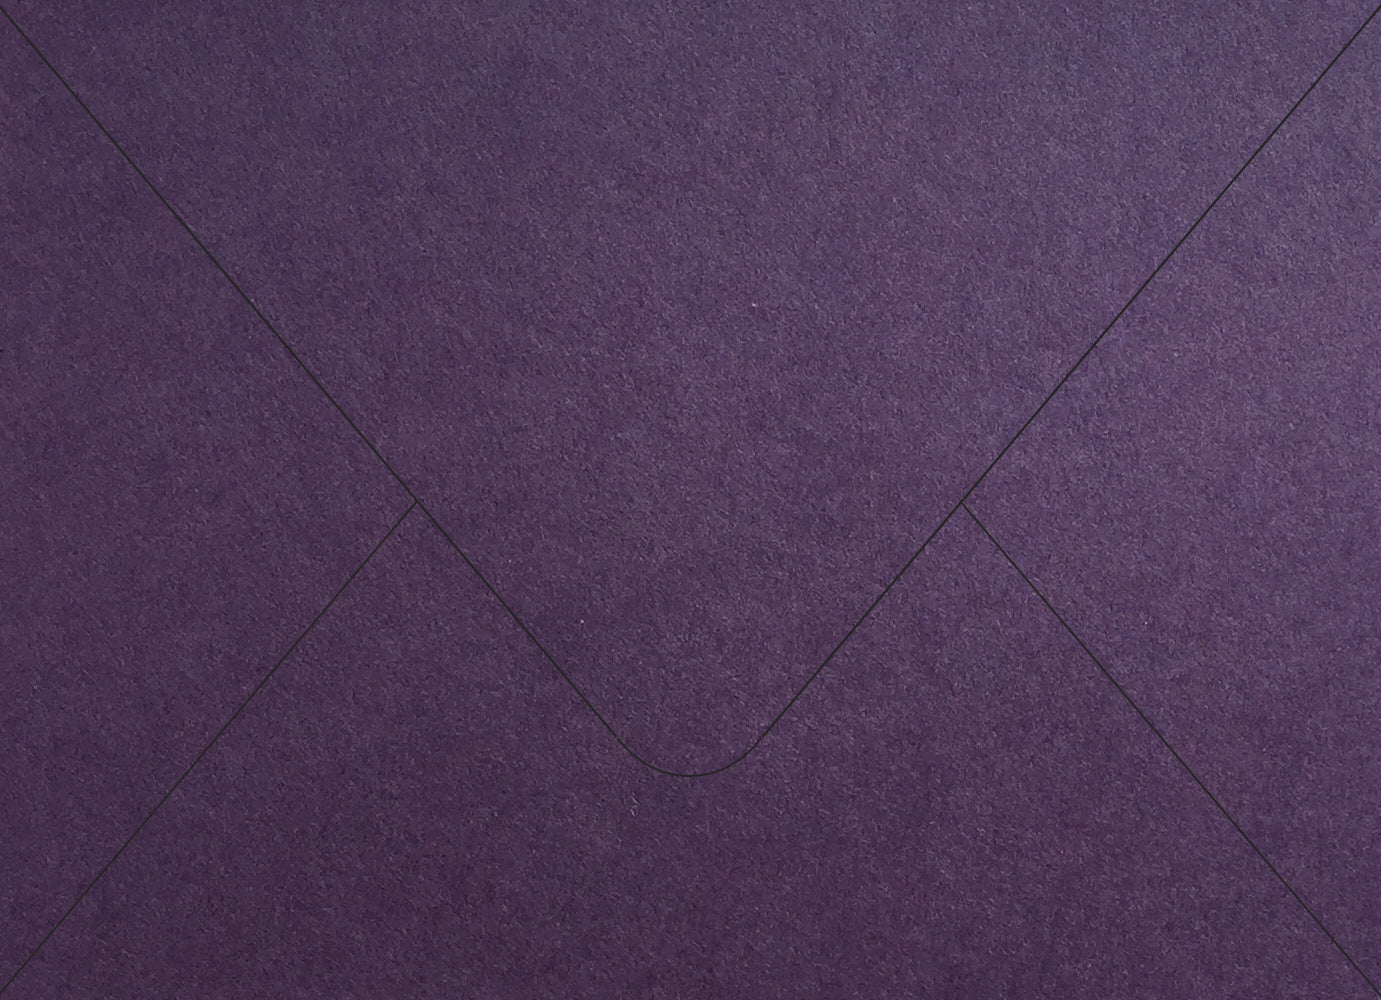  Dark Amethyst Colorplan Euro Envelopes